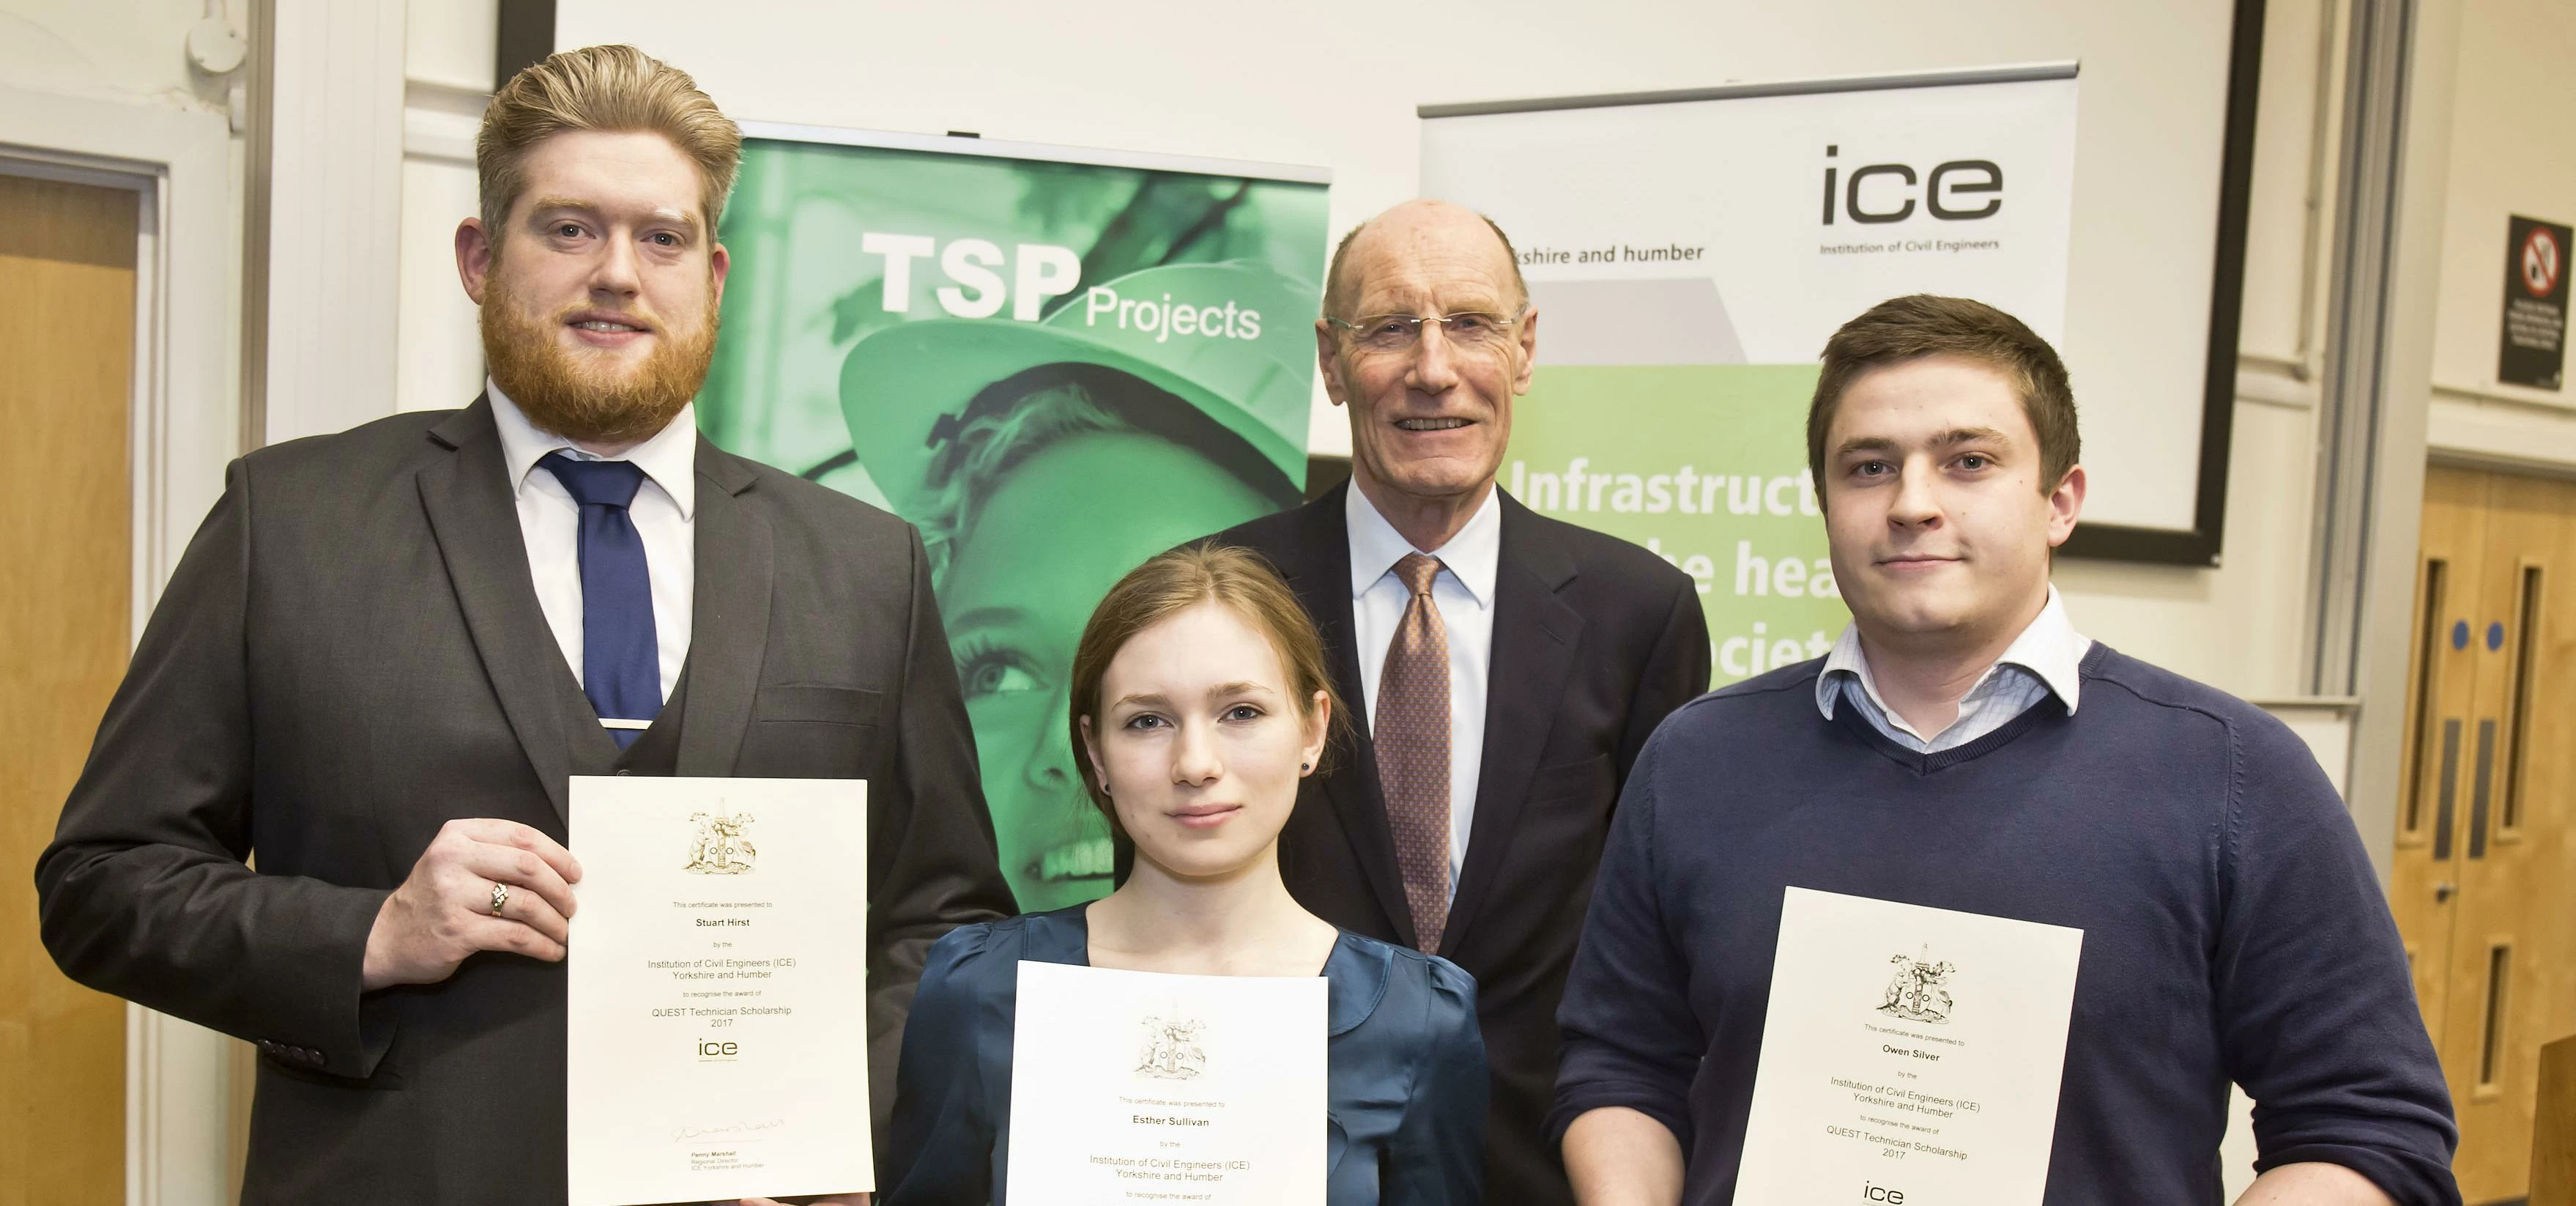 ICE QUEST Technician Scholarship winners Stuart Hirst, Esther Sullivan and Owen Silver with Sir John